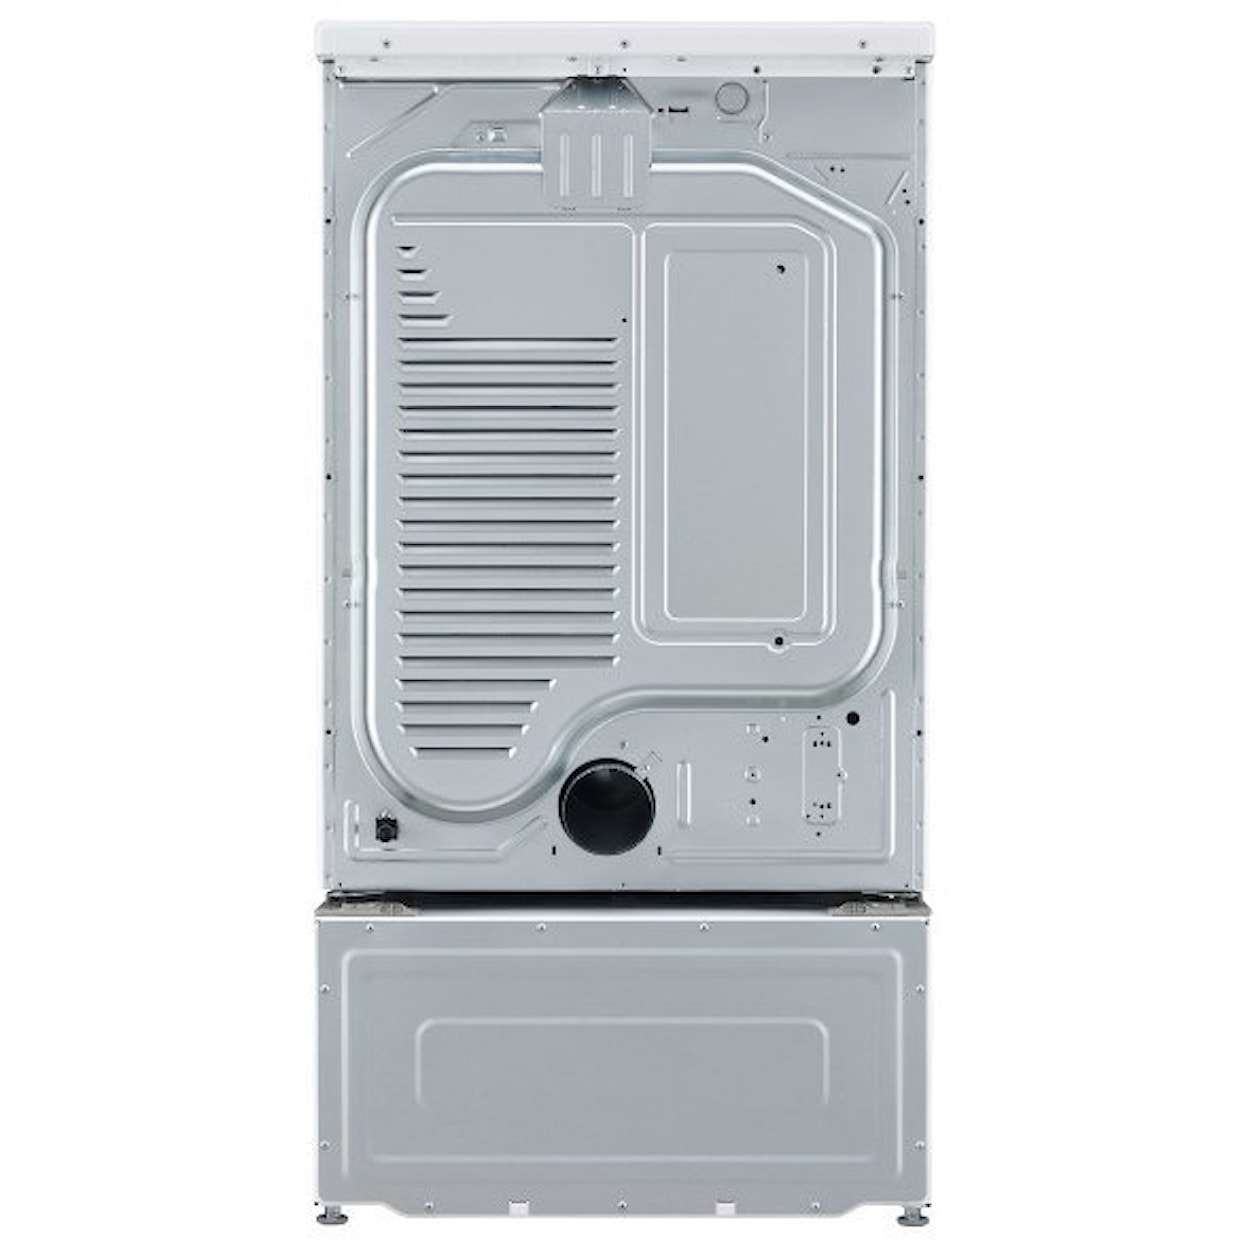 LG Appliances Dryers 7.4 Cu. Ft. TurboSteam™ Electric Dryer